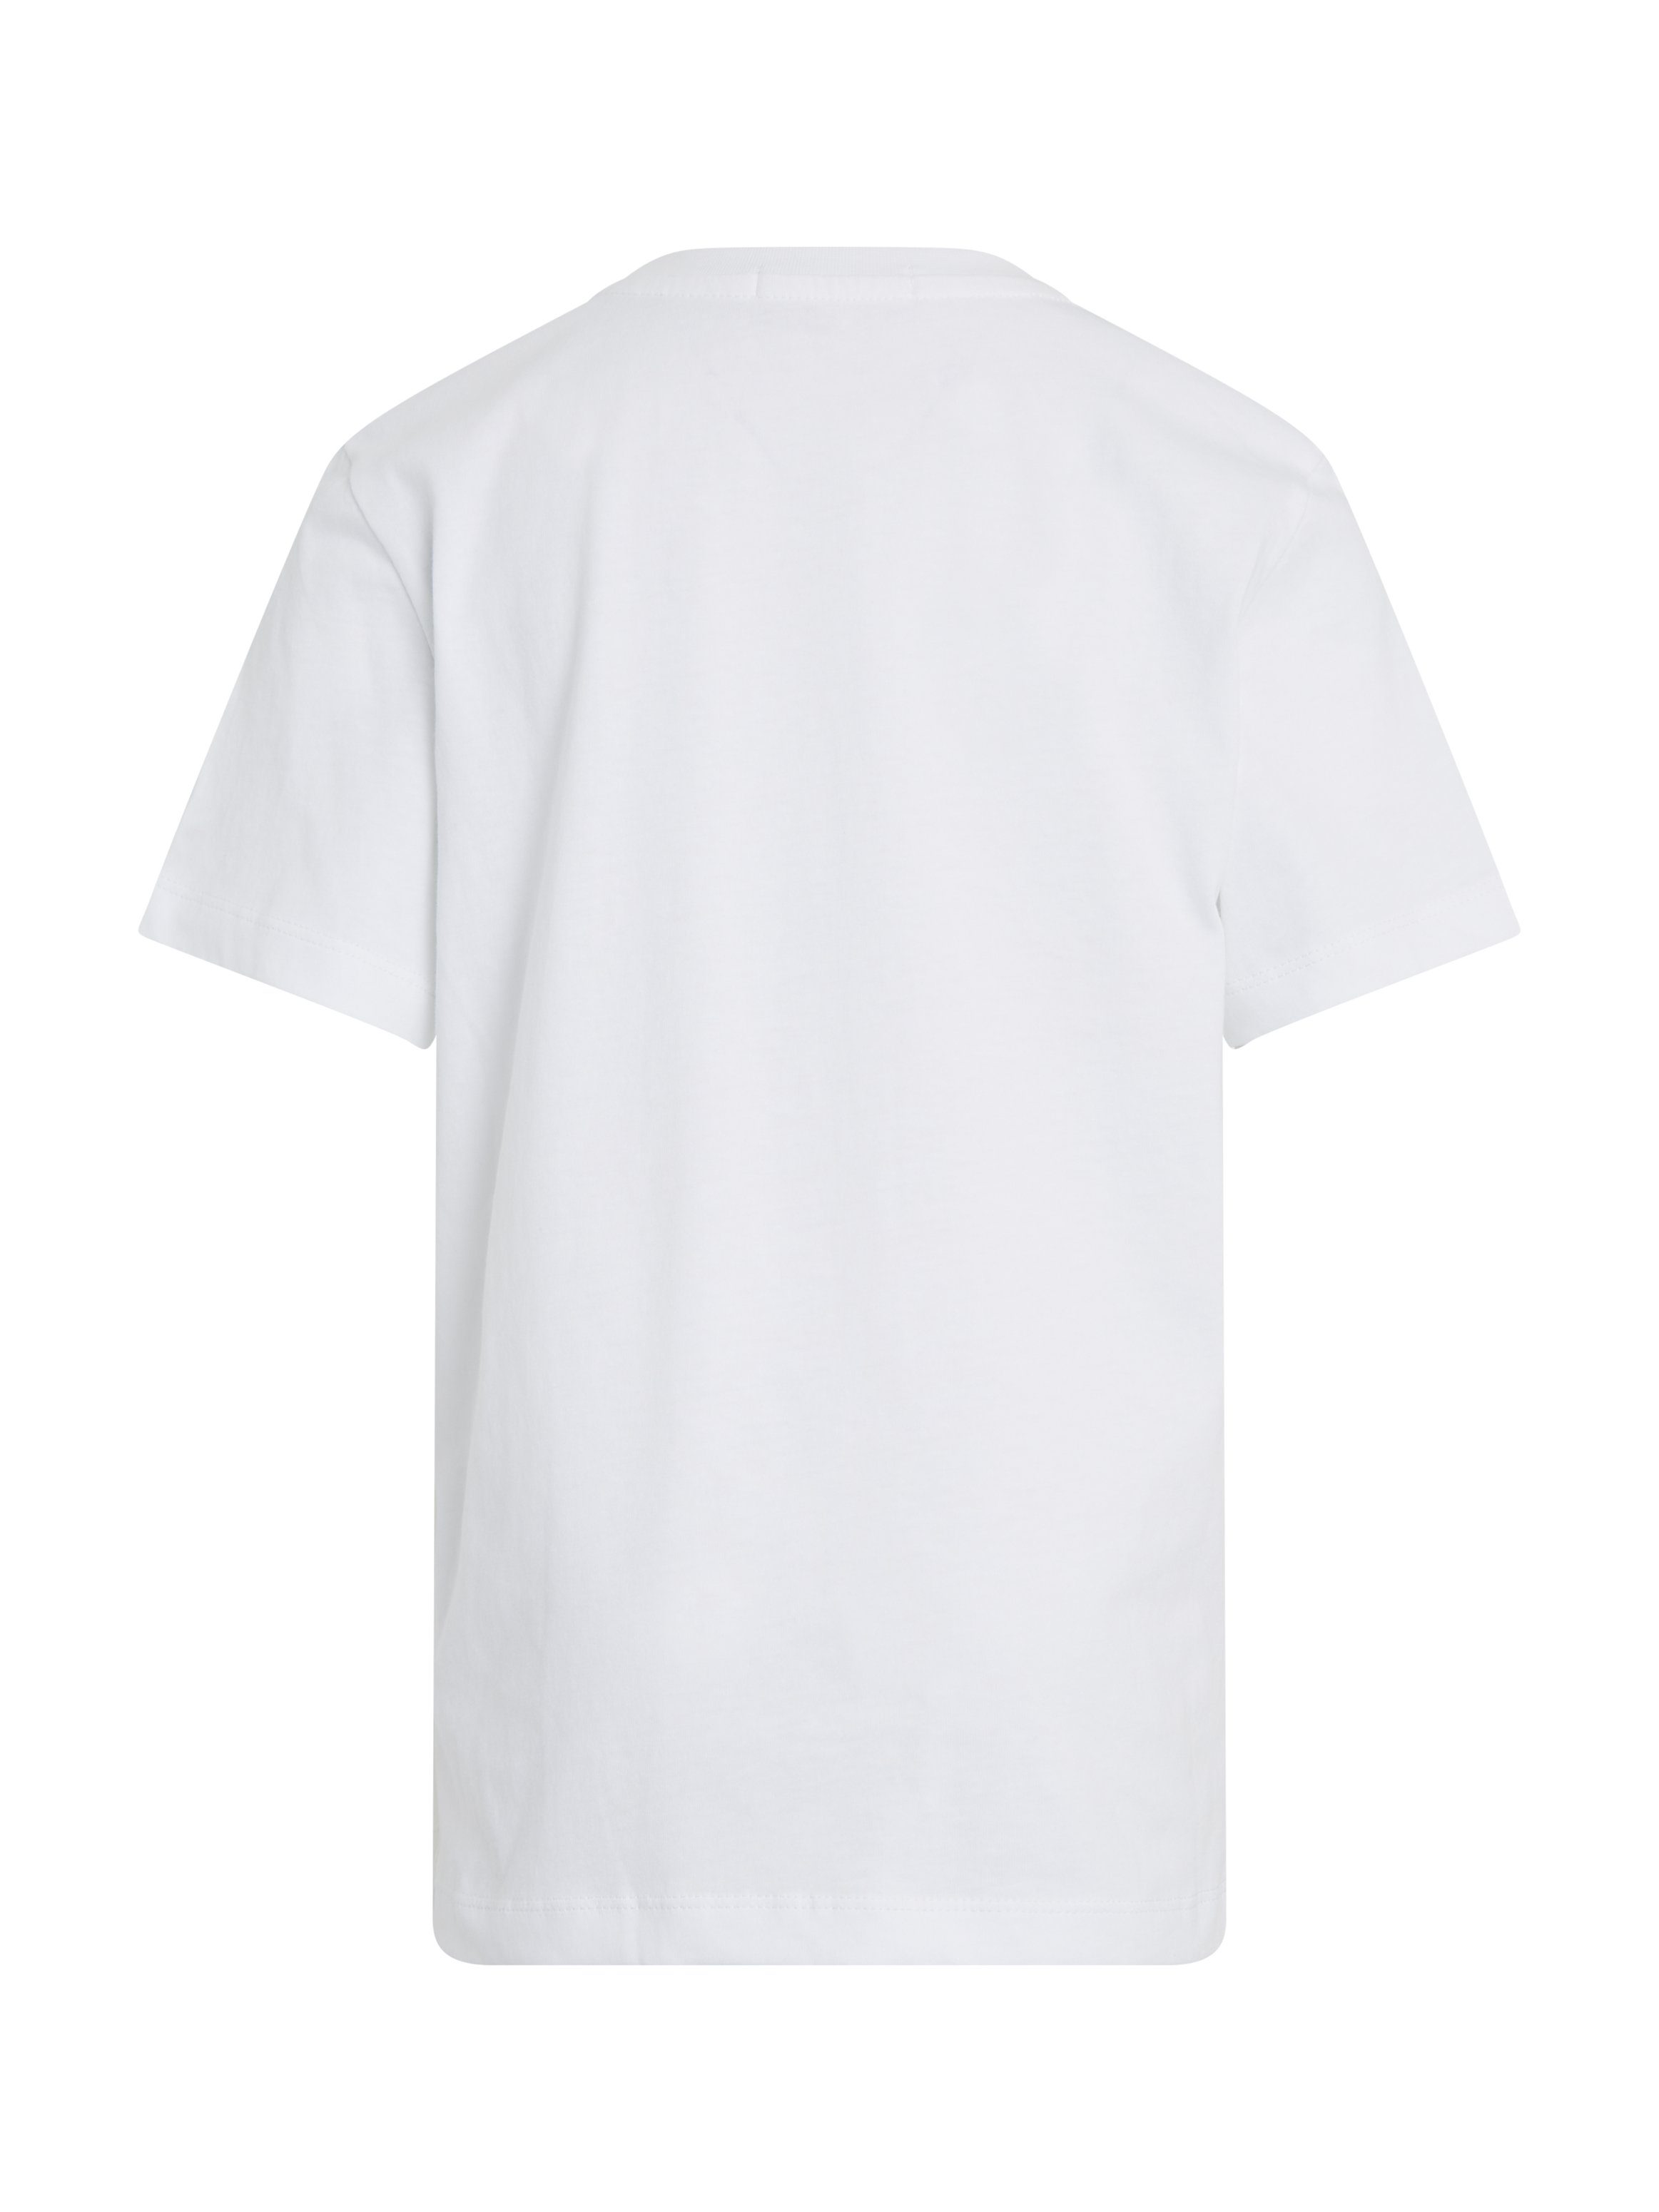 Jeans White Calvin MONOGRAM T-Shirt Bright CK T-SHIRT Klein SS